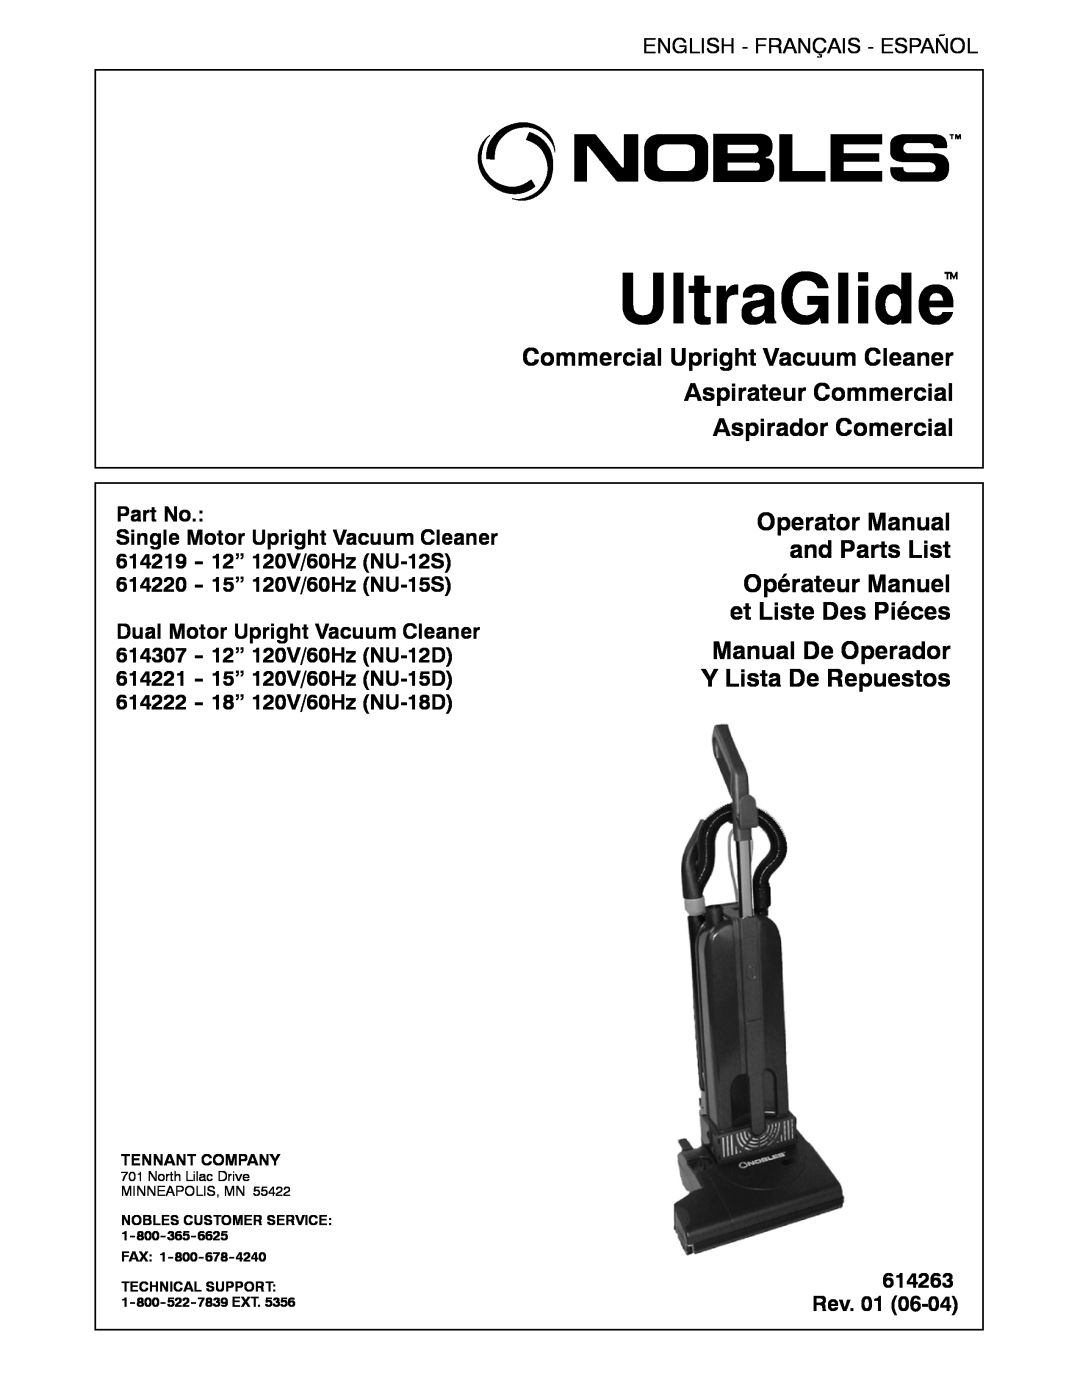 Nilfisk-ALTO 614222 manual Commercial Upright Vacuum Cleaner, Aspirateur Commercial Aspirador Comercial, UltraGlide 